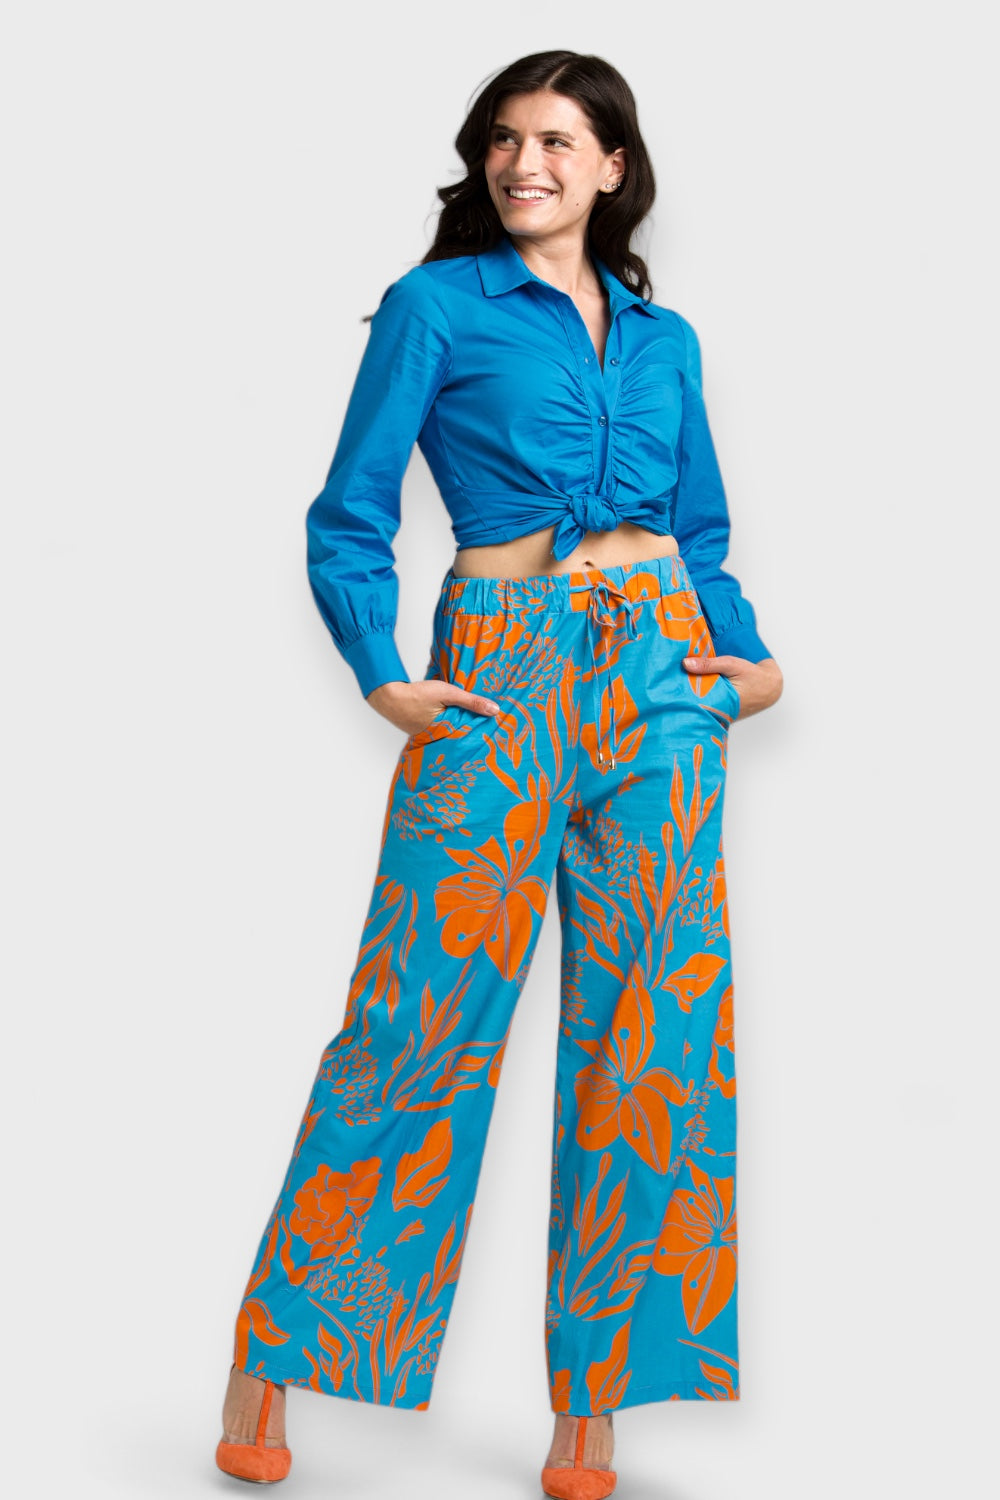 Capri Blue & Orange Floral Cotton Palazzo Pants by Enhle Italian Women's Clothing Paired with Capri Blue Cotton Shirt and Arancia Orange T-Strap Heels